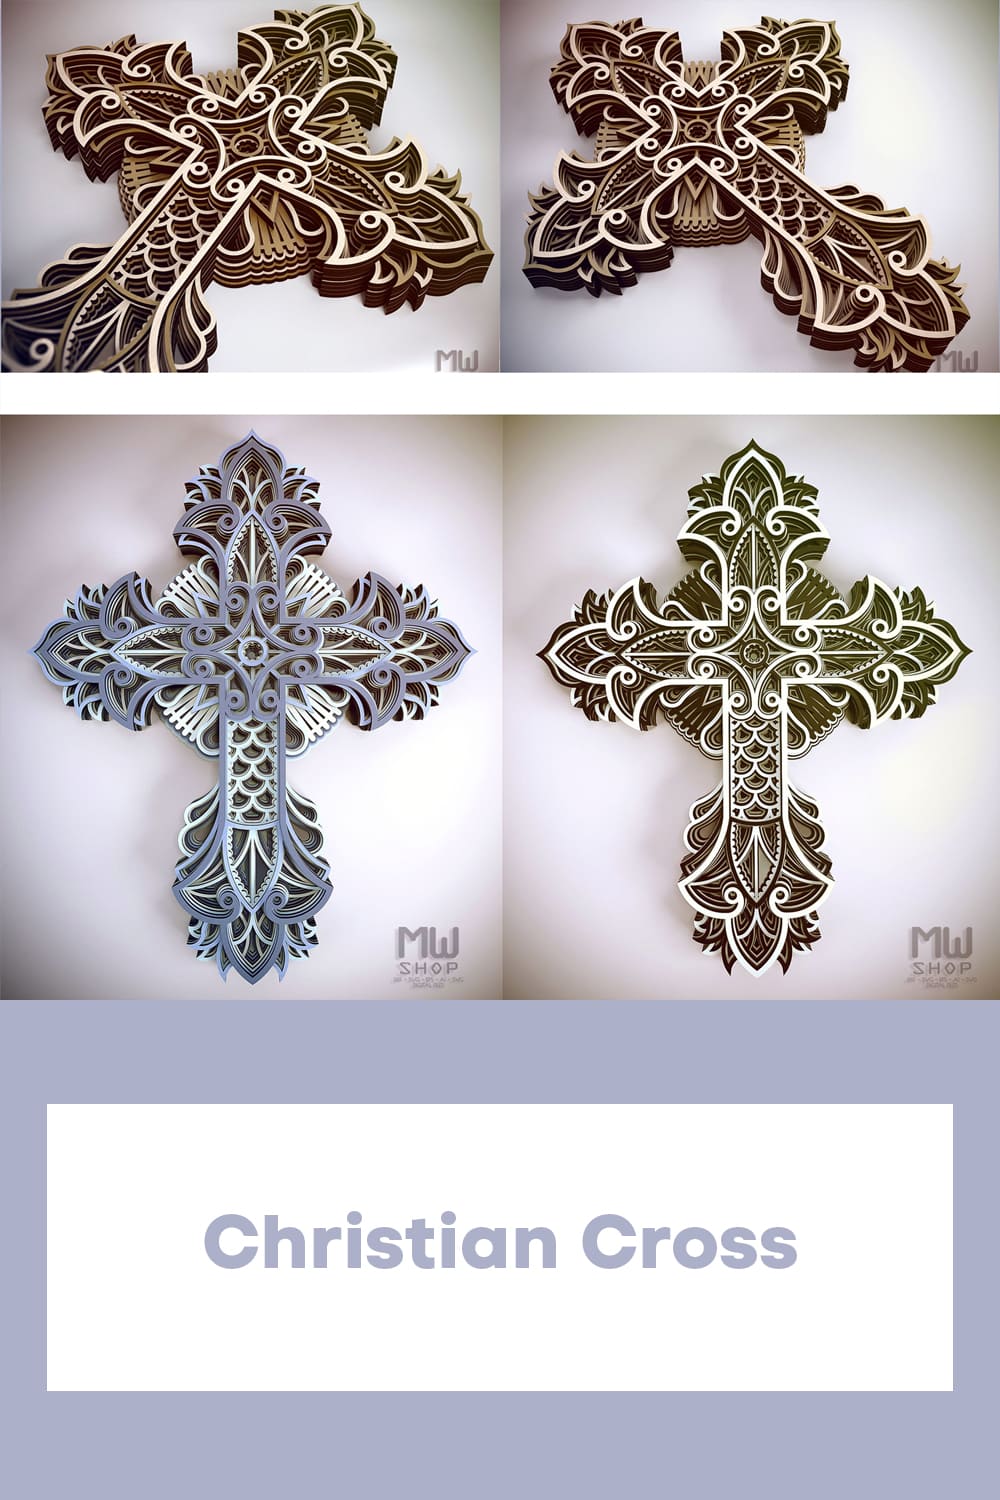 Cr04 christian cross - pinterest image preview.